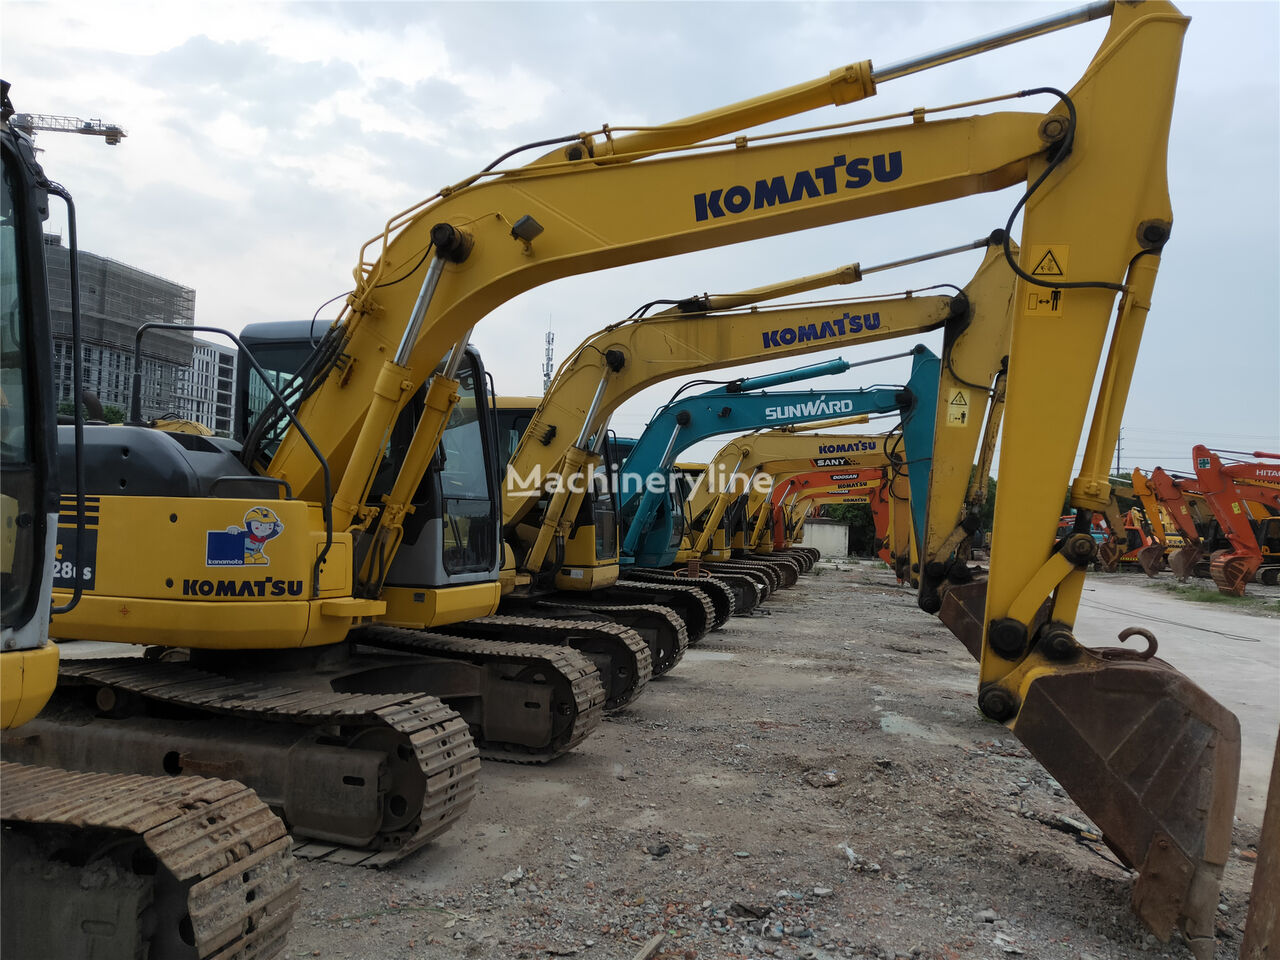 Komatsu PC128US tracked excavator